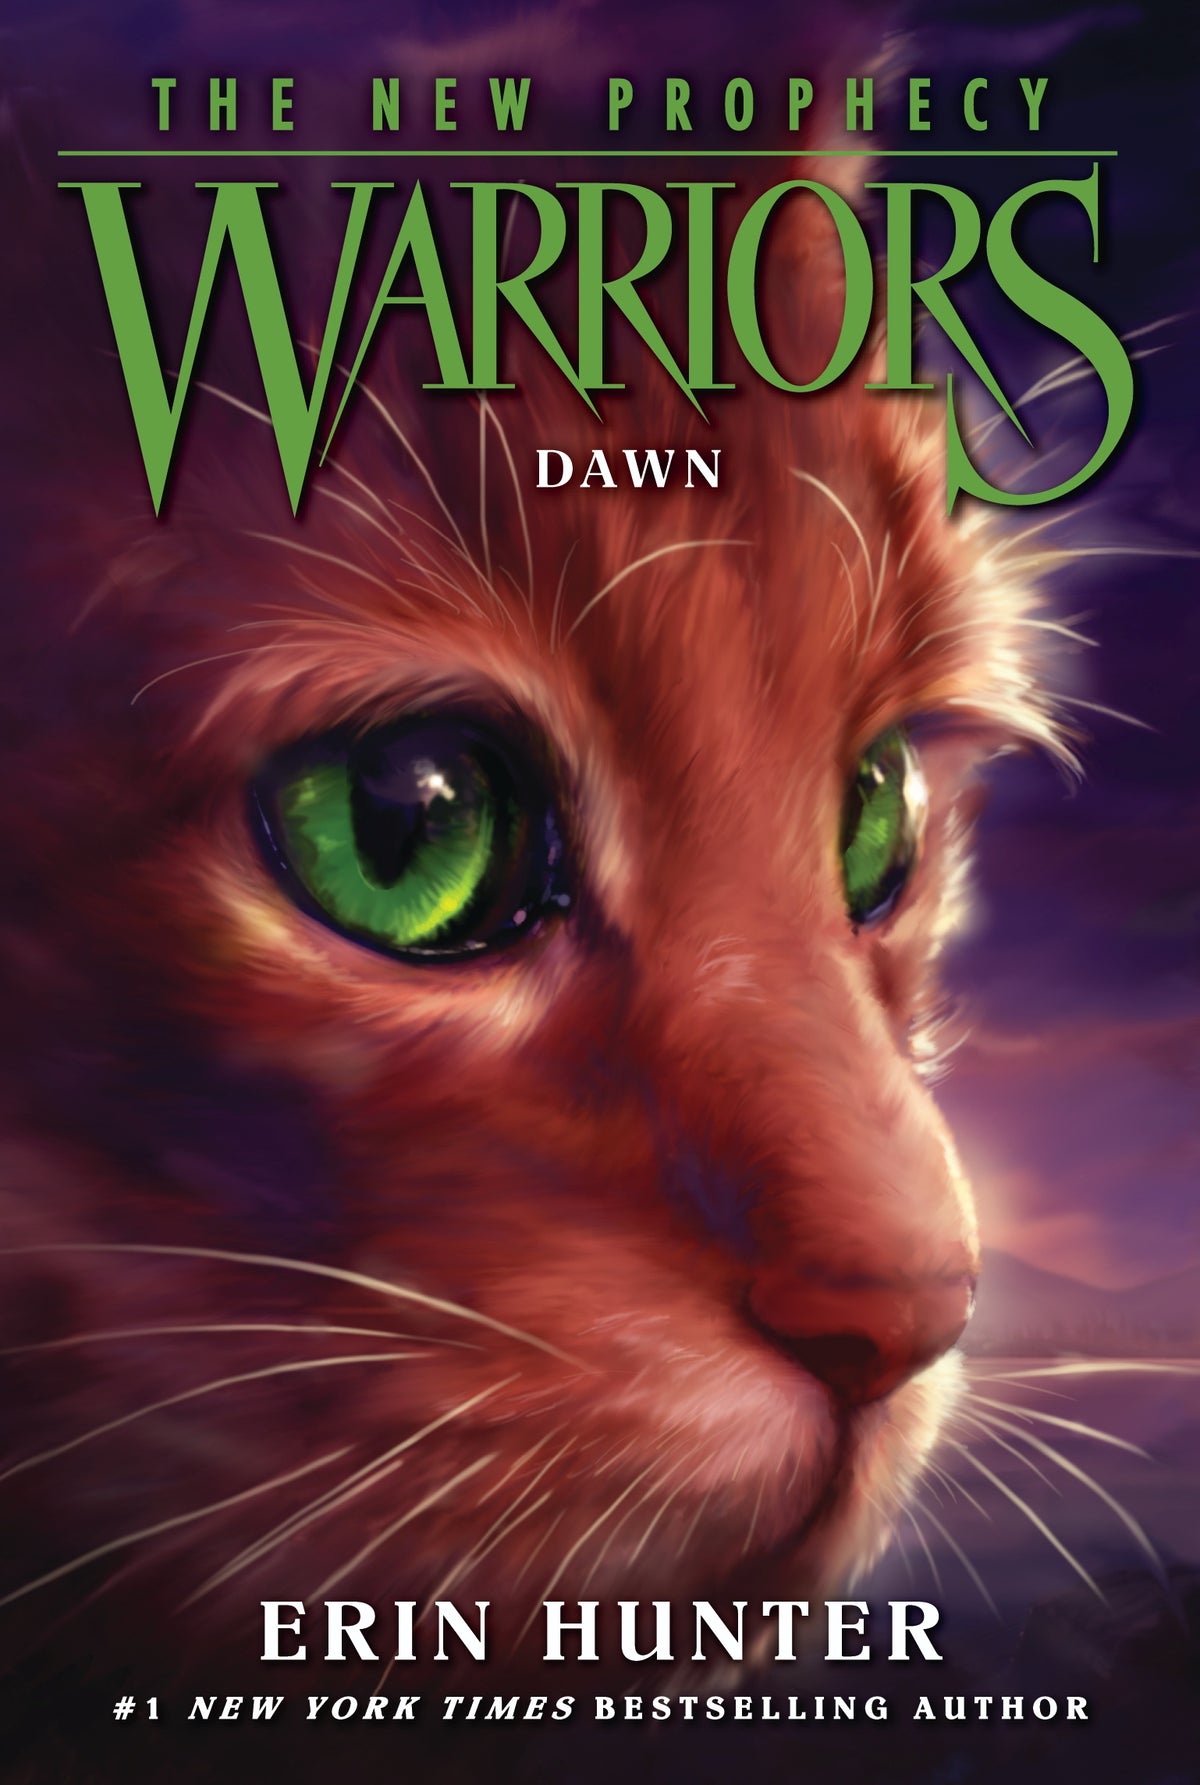 warrior cats movie release date